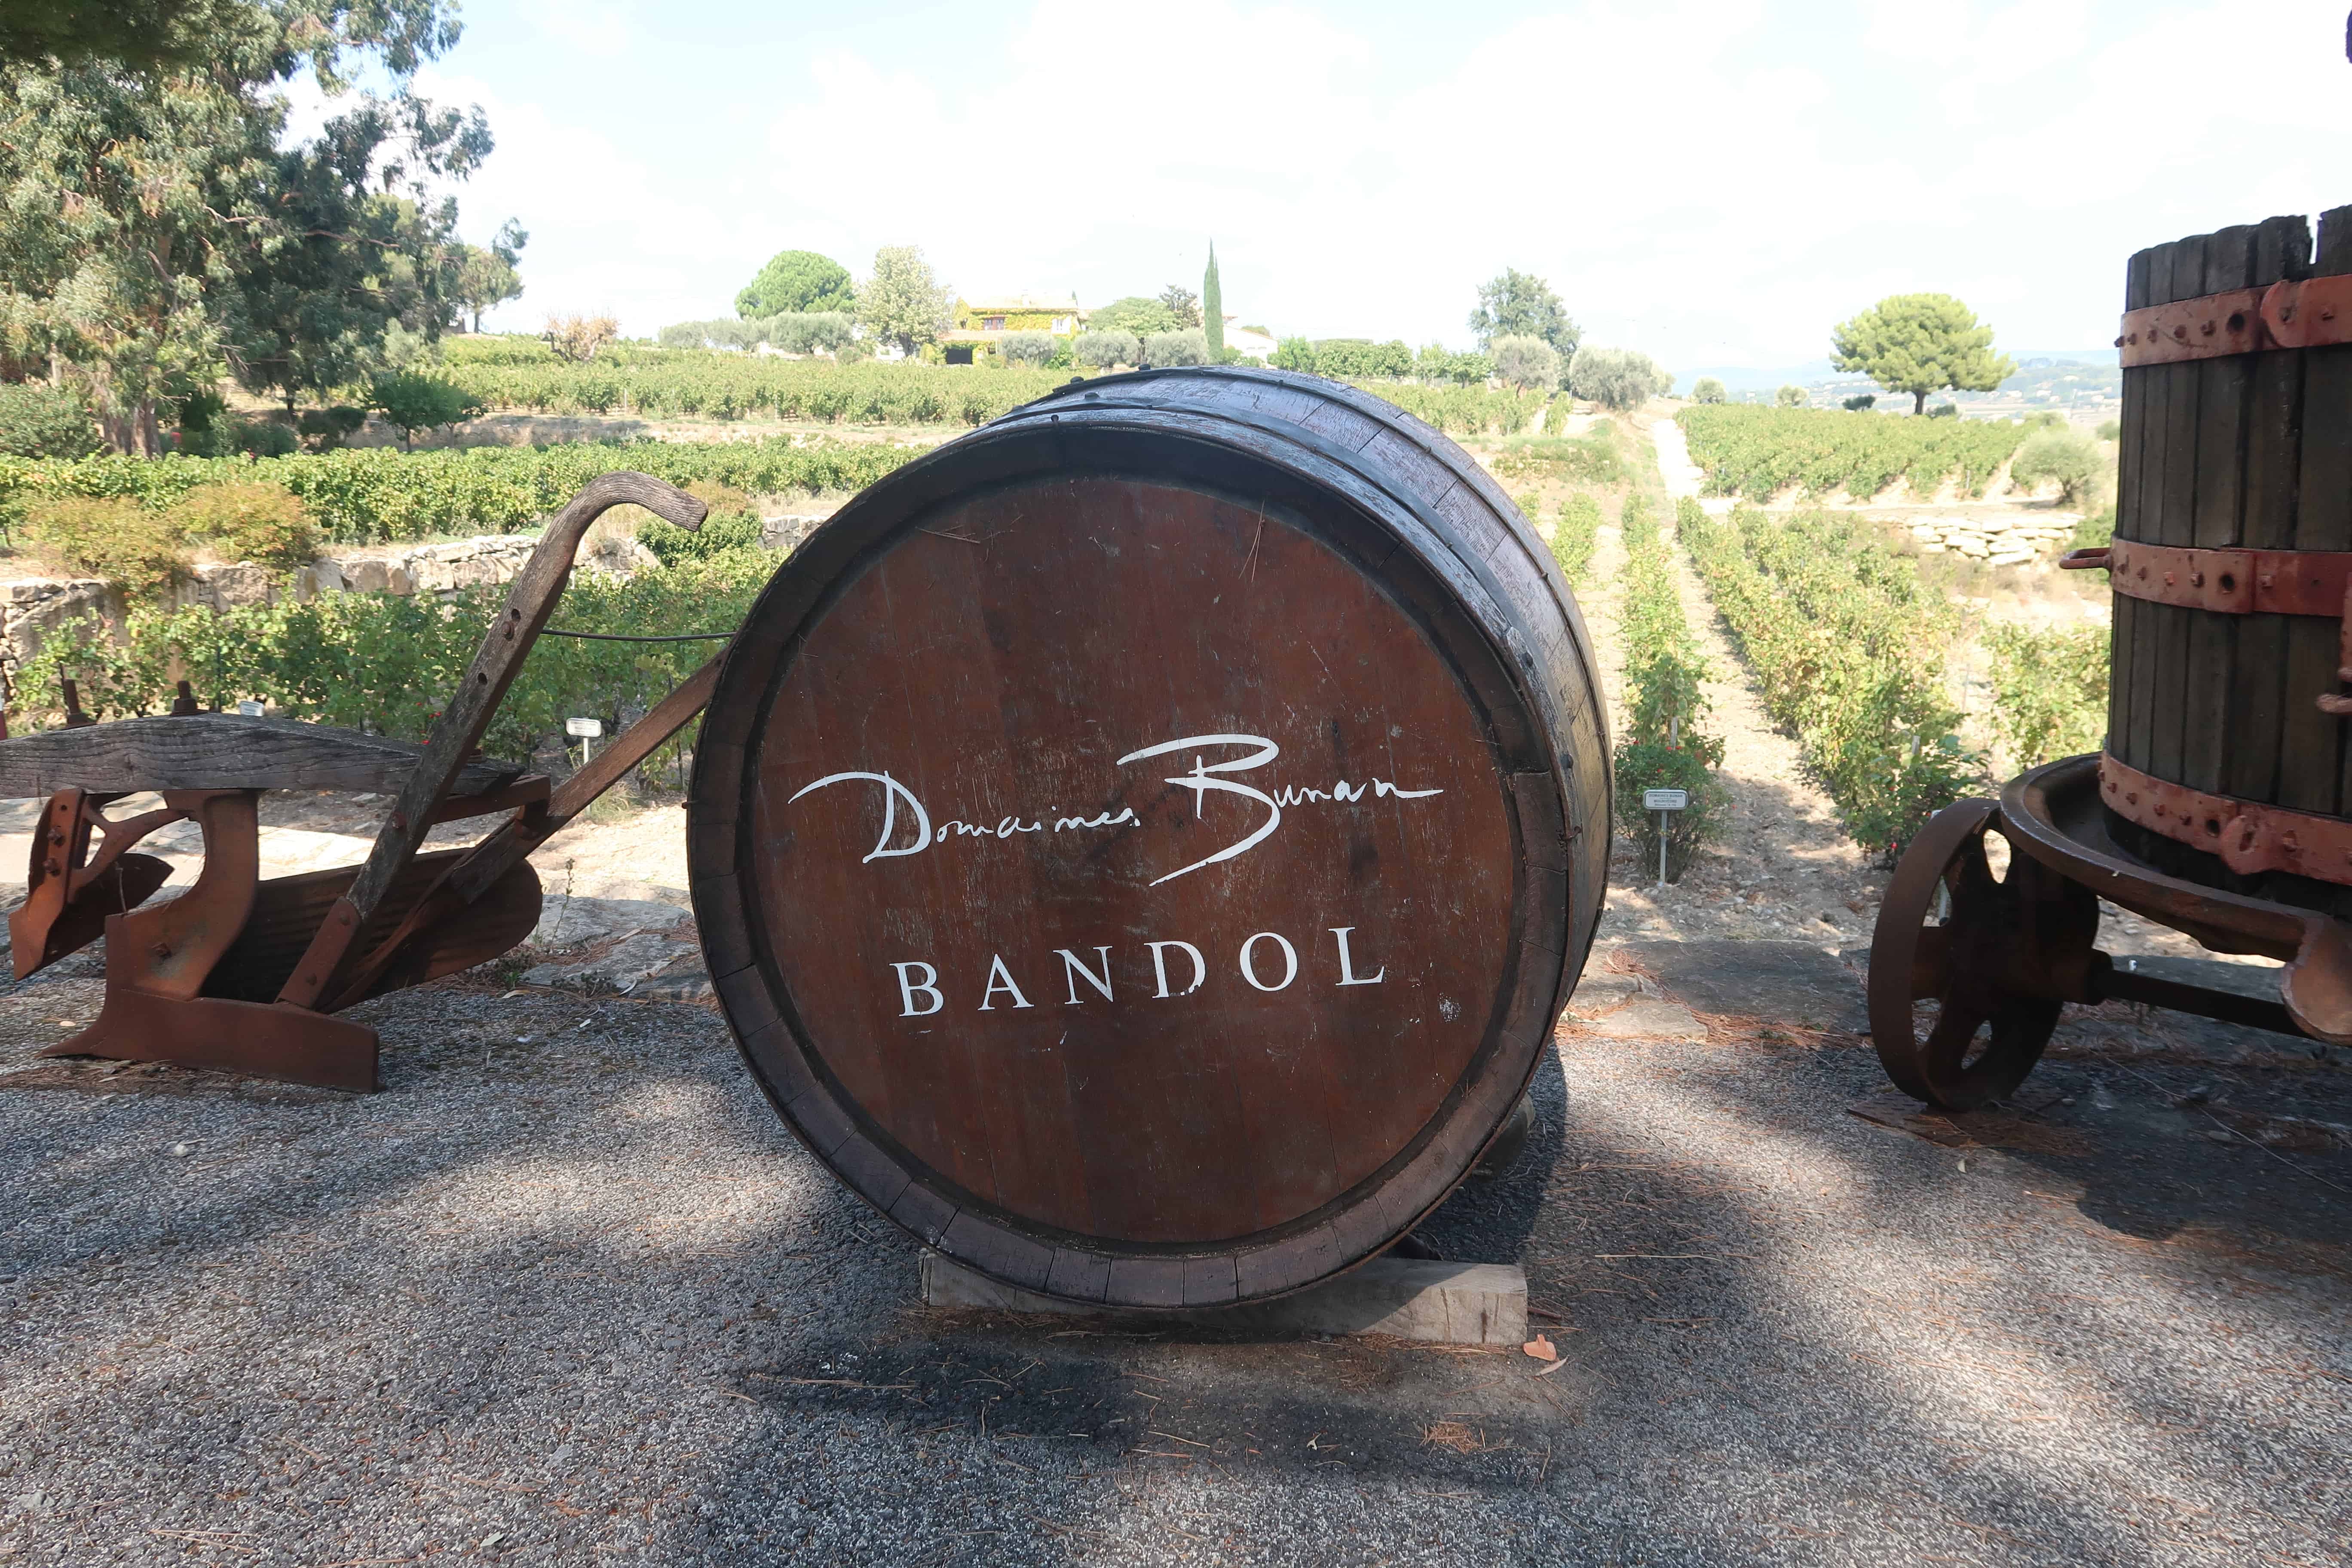 France Provence vineyard tours